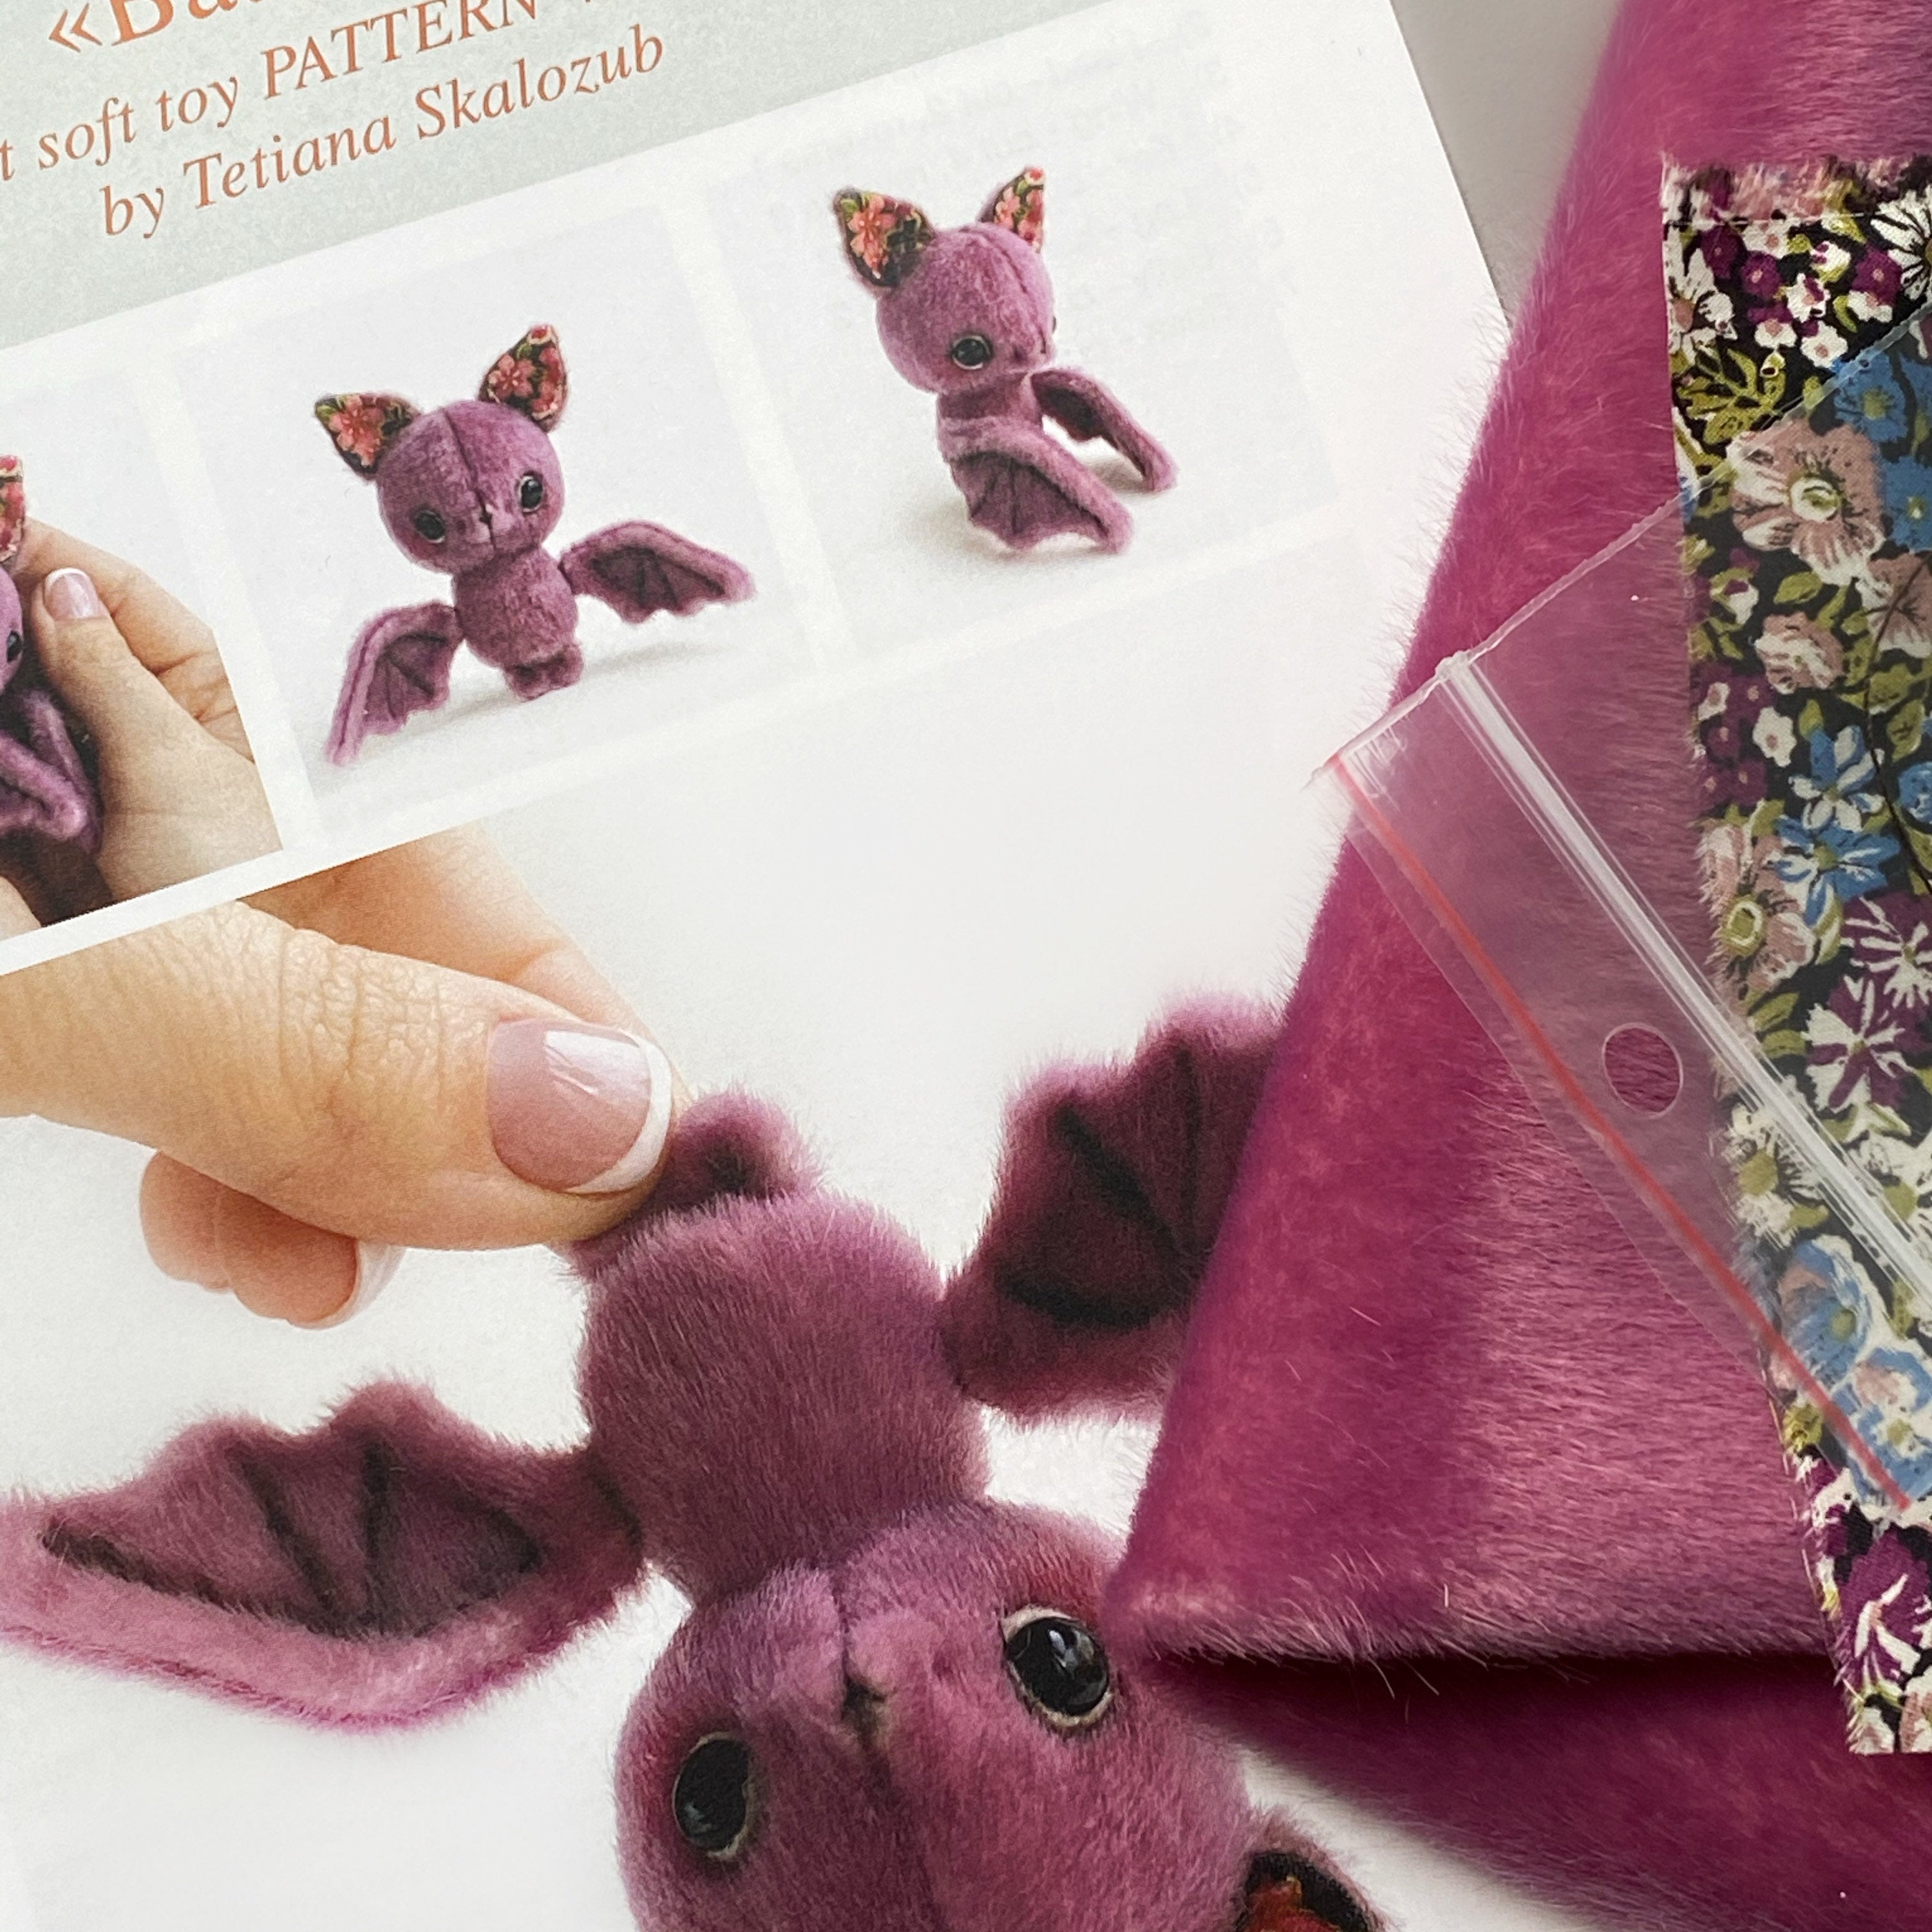 Bat - Sewing KIT, artist pattern, stuffed toy bat, cute bat tutorials, soft toy diy stuffed animal pattern craft kit for adults Bestseller